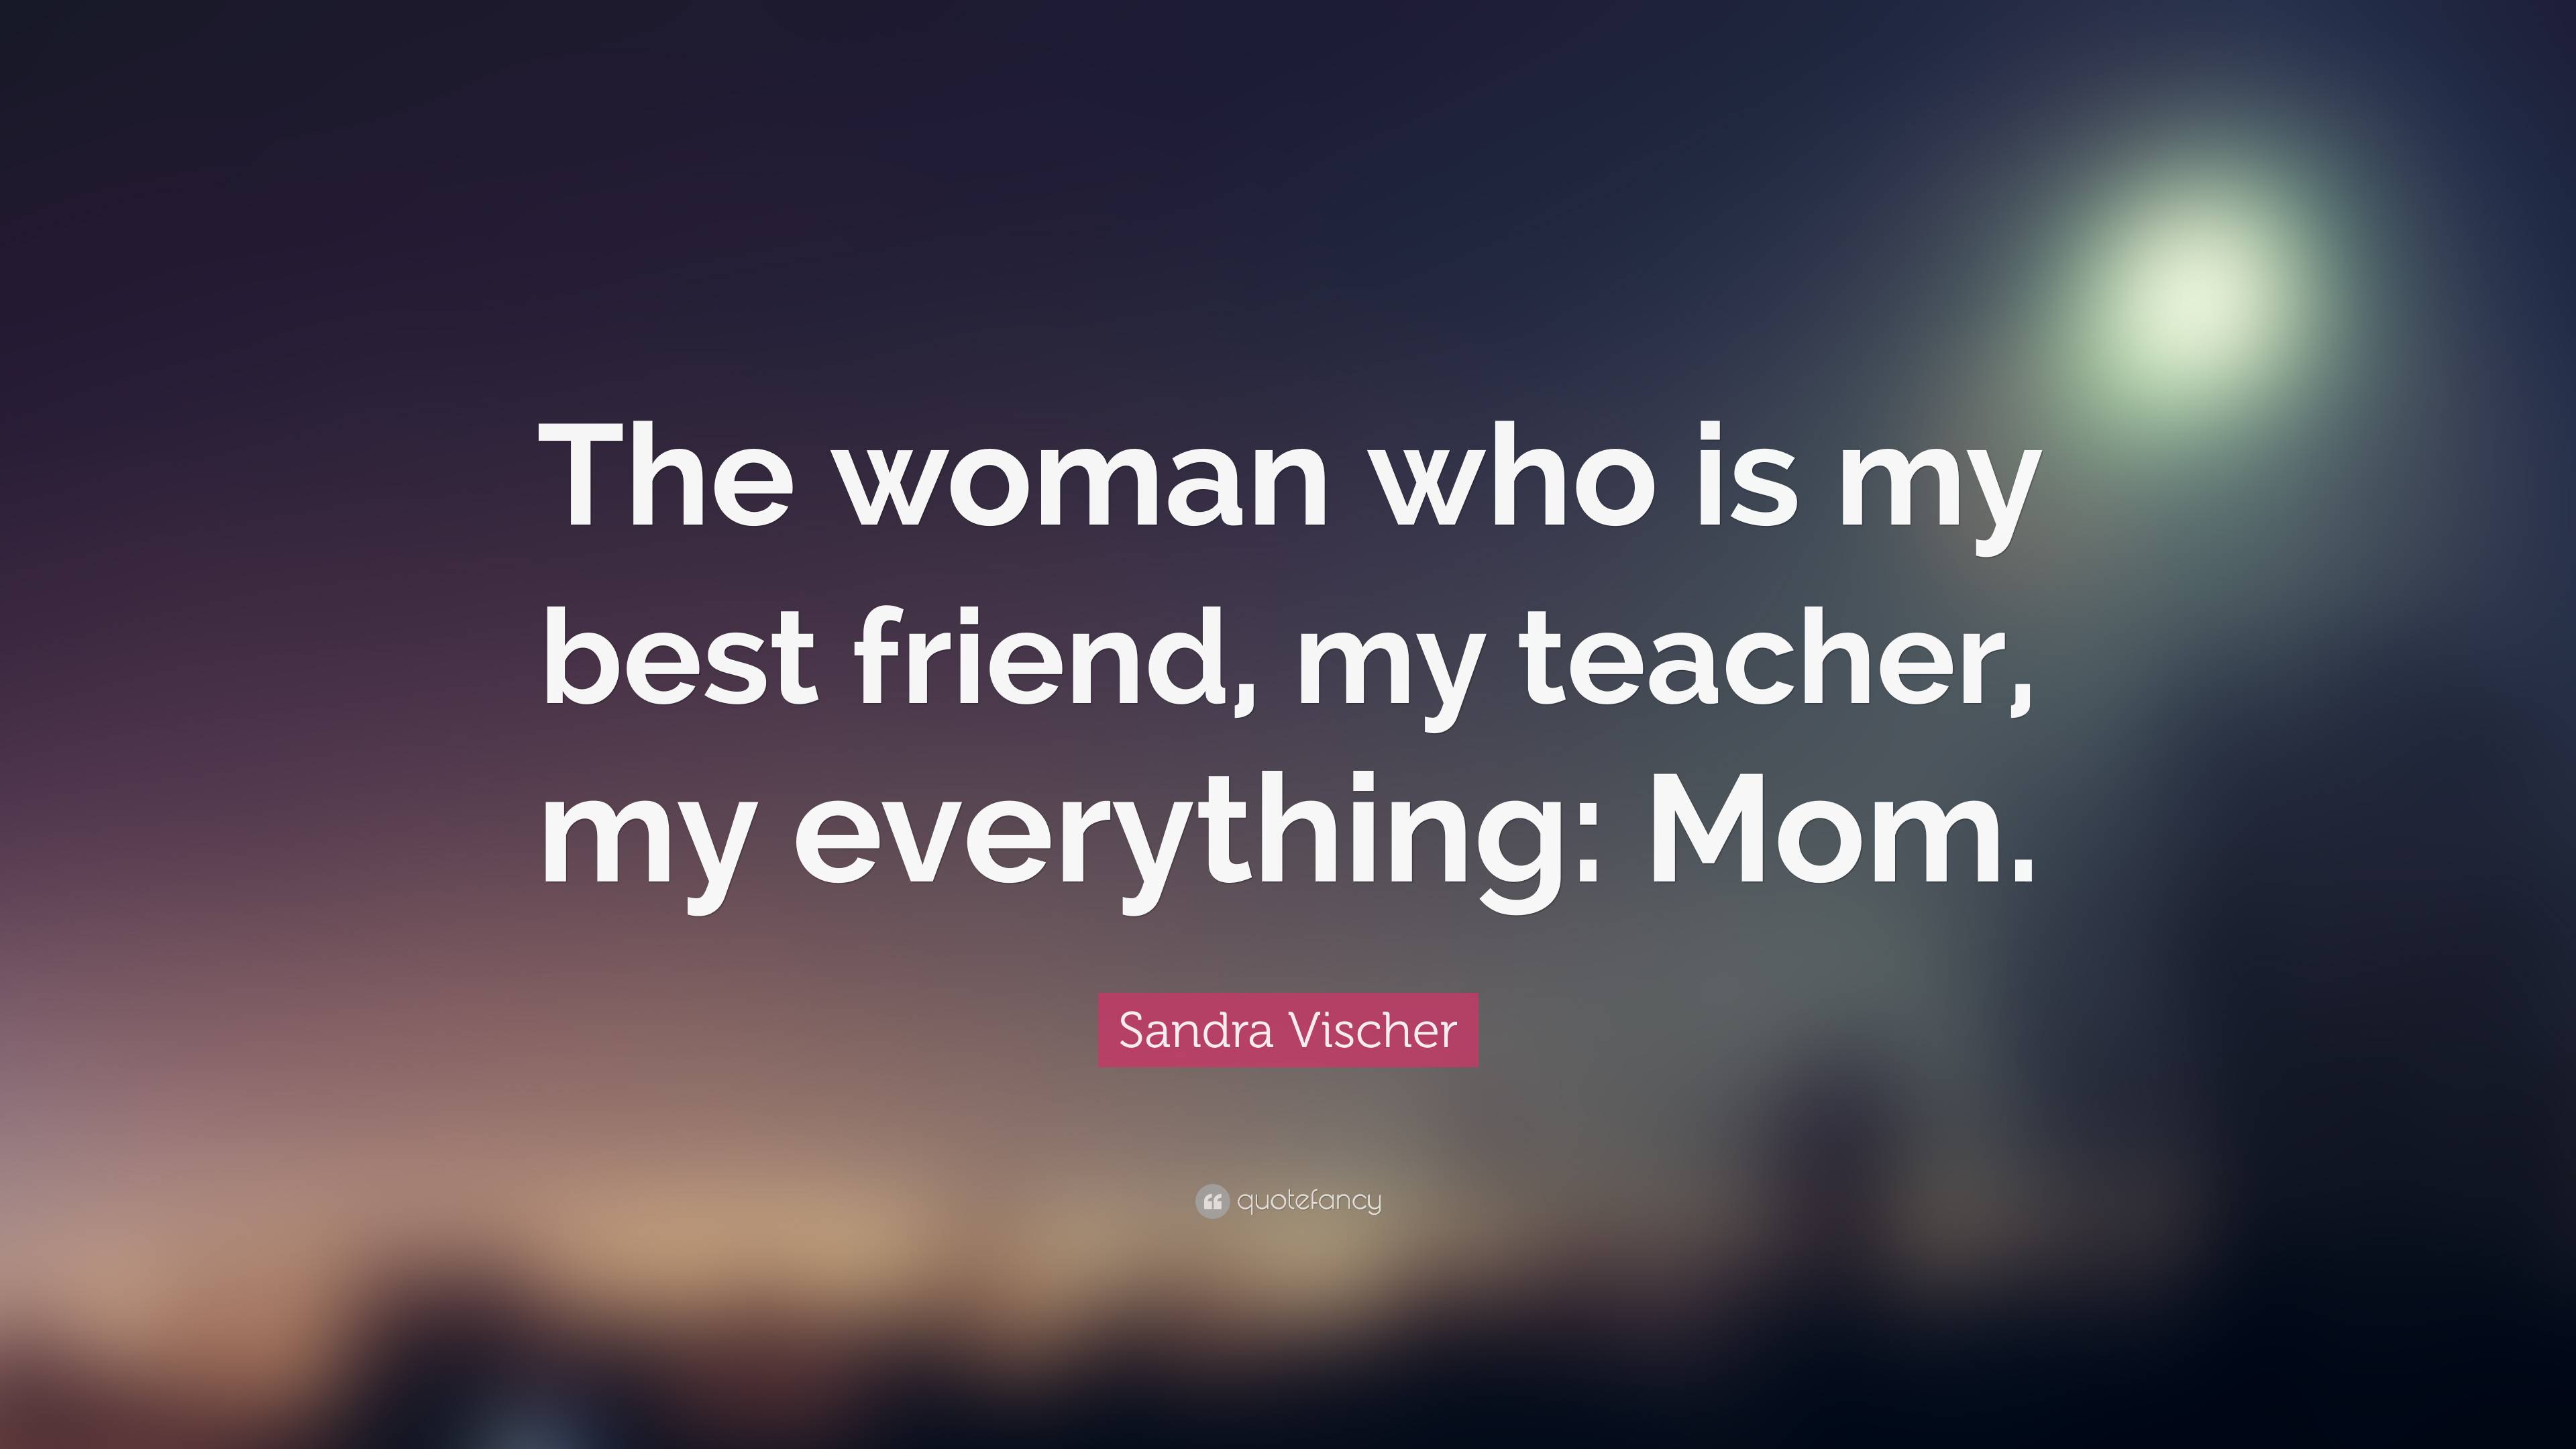 Sandra Vischer Quote: “The woman who is my best friend, my teacher